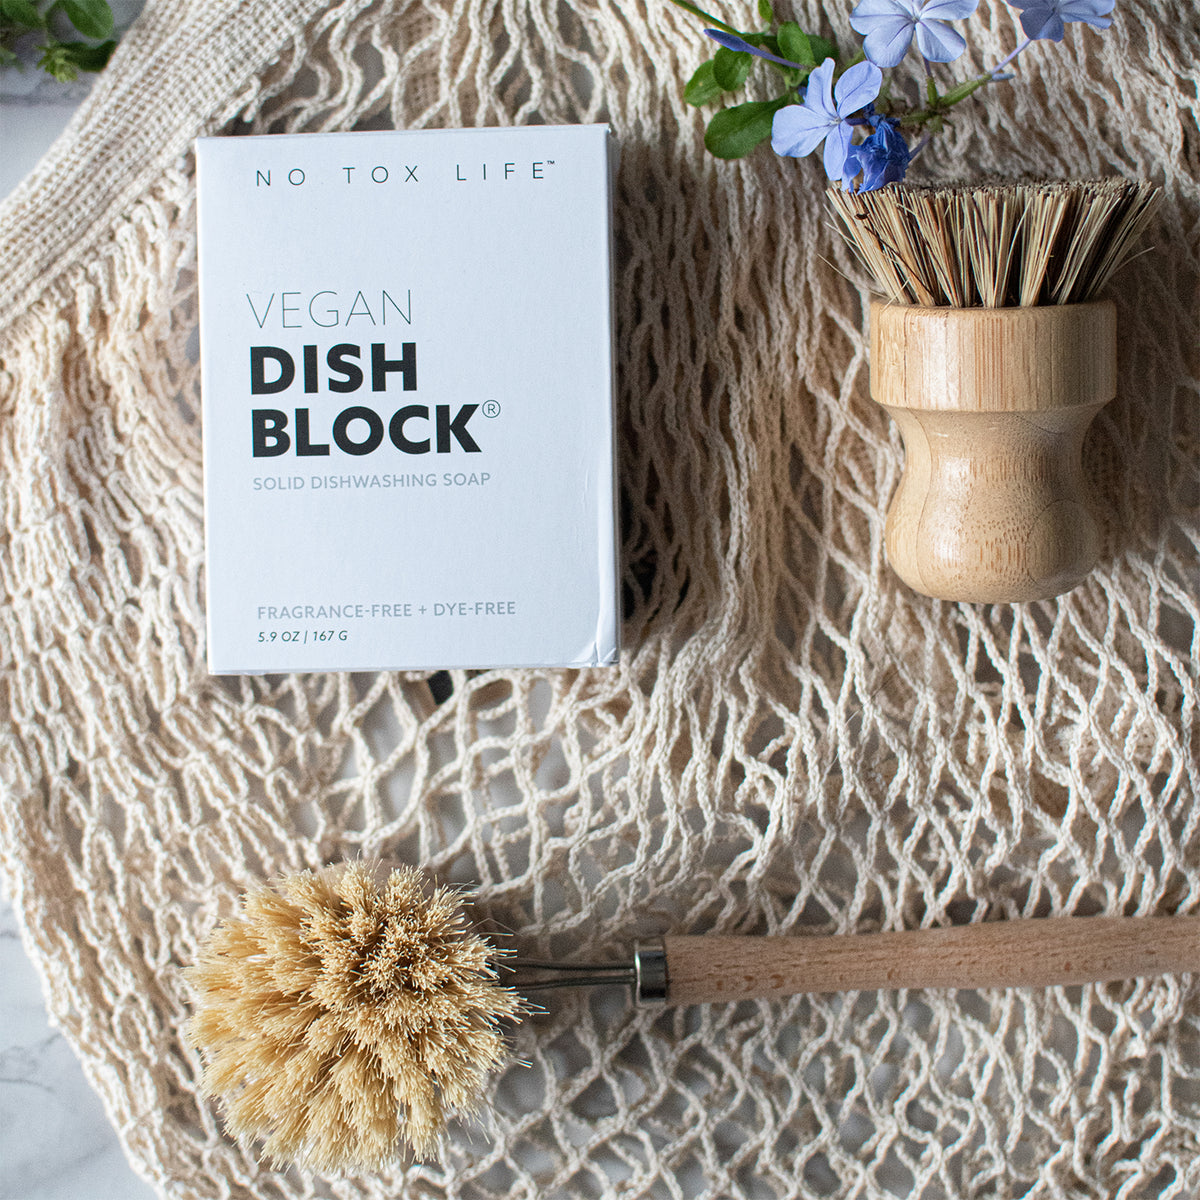 vegan dish block box, next to pot scrubber, above dish brush sitting on a mesh produce bag